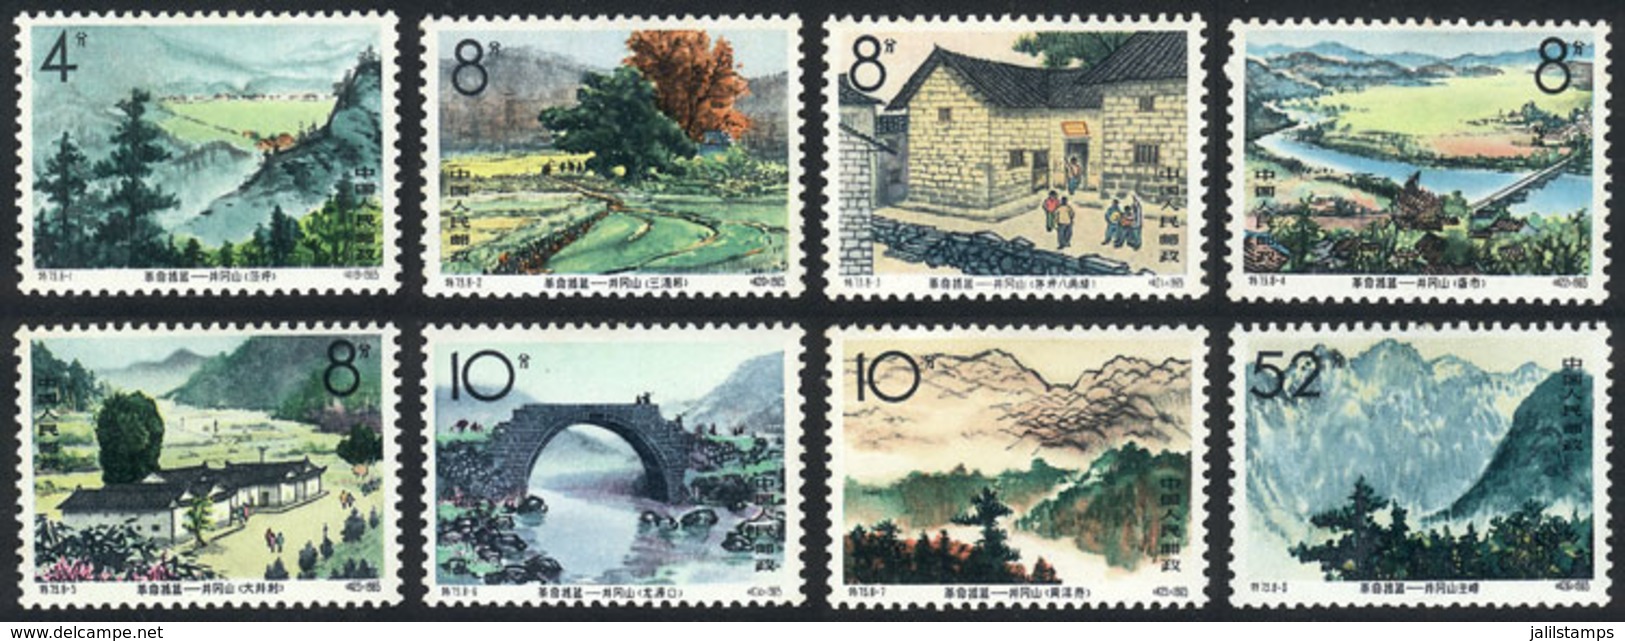 CHINA: Sc.834/841, 1965 Jinggangshan Mountain, Cmpl. Set Of 8 Values, Mint Very Lightly Hinged, VF Quality! - Usati